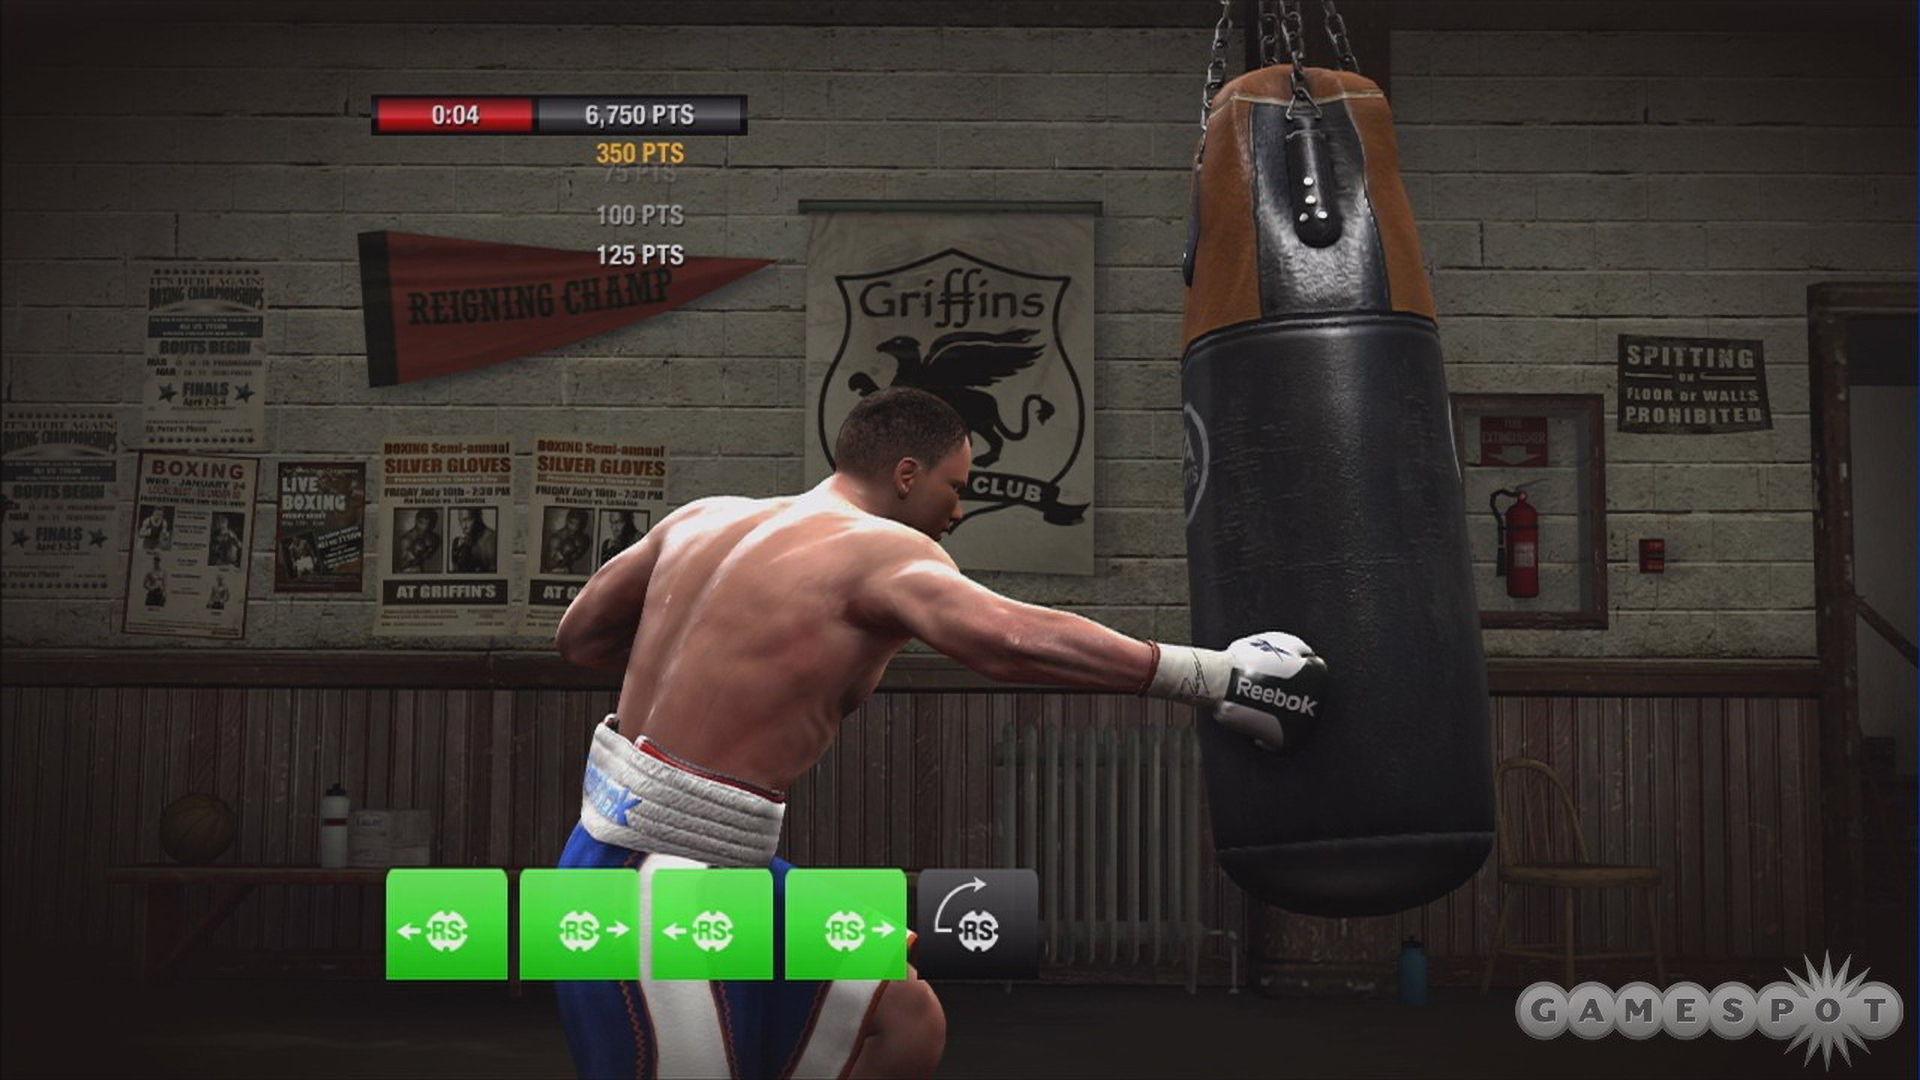 Jogo Fight Night Round 4 para PS3